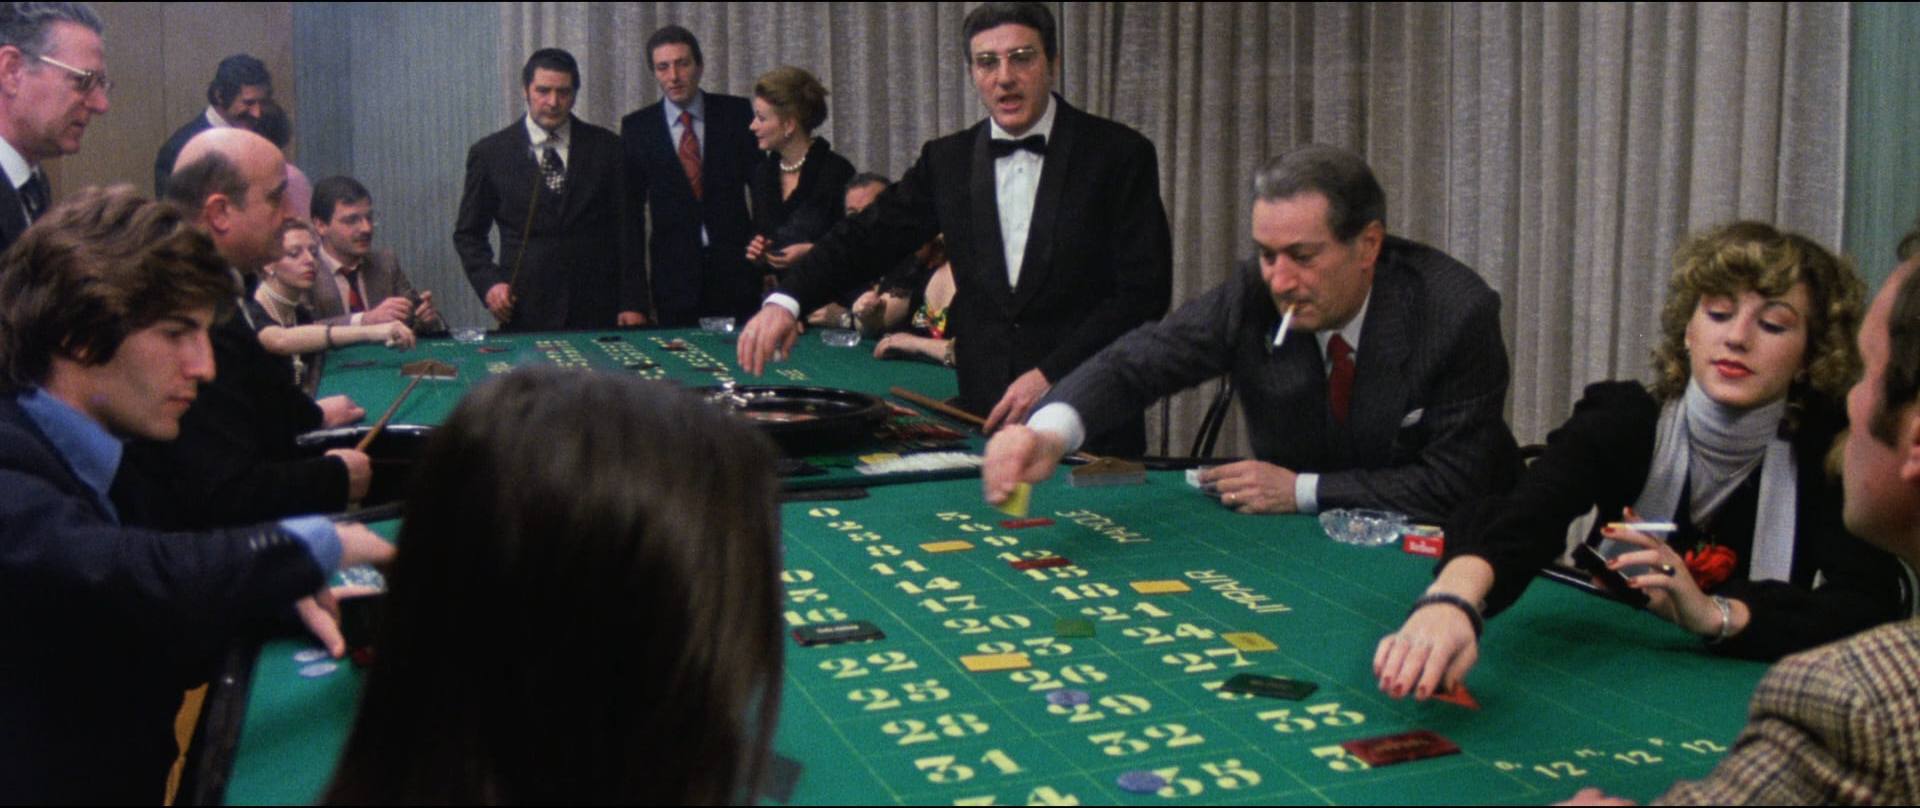 z 23 Players at the clandestine gambling den.jpg